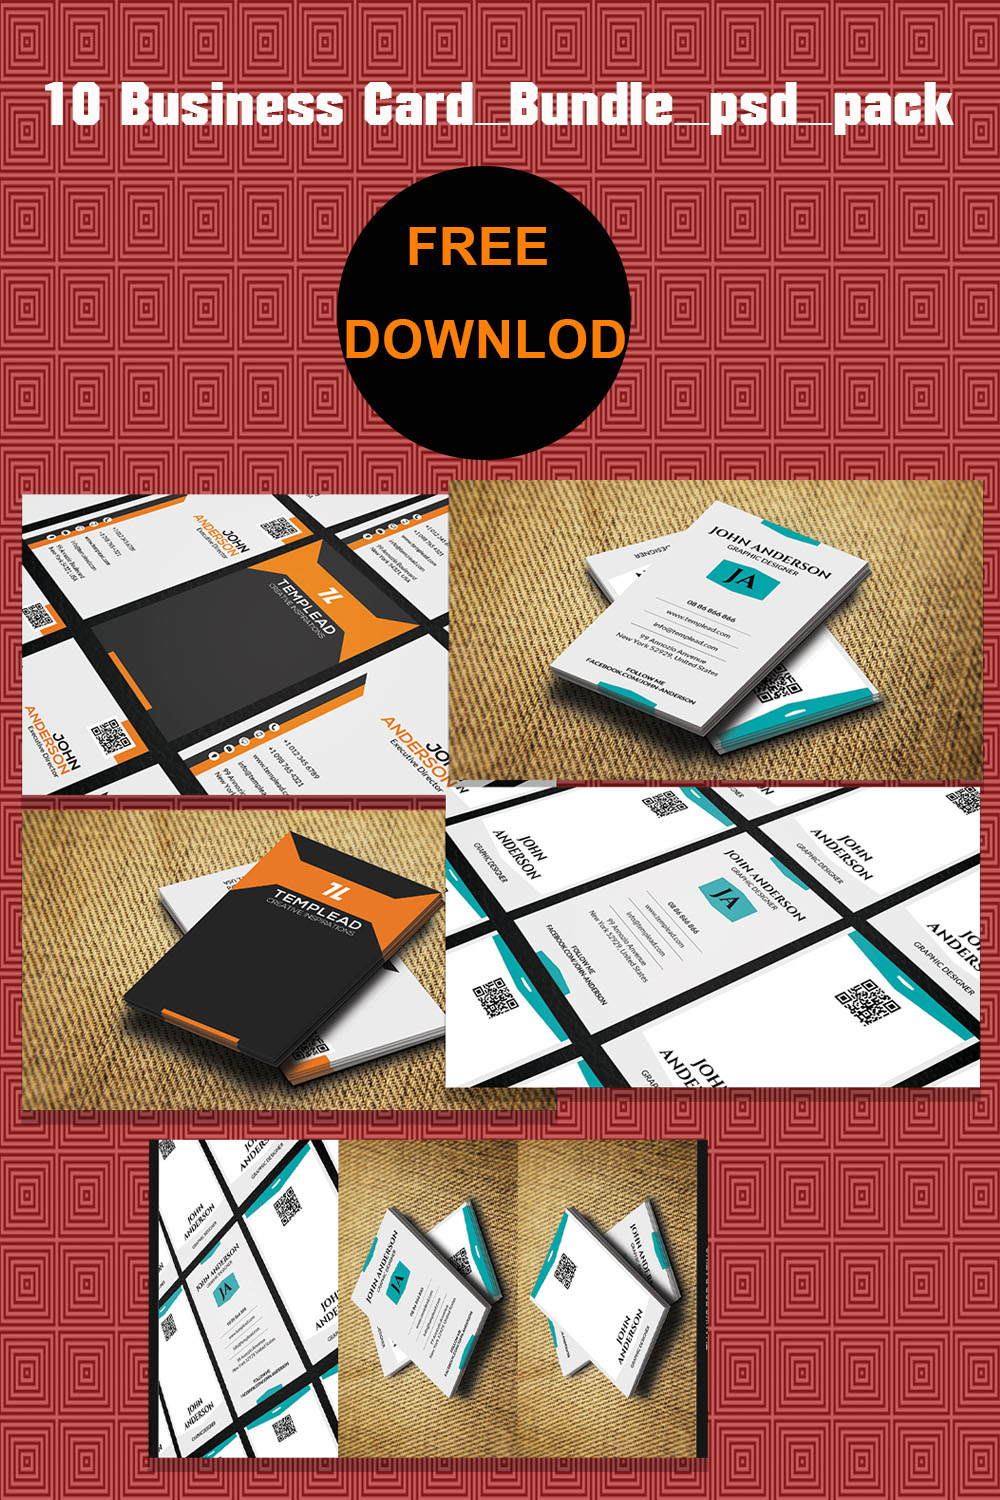 10 Business Card Bundle psd pack pinterest preview image.